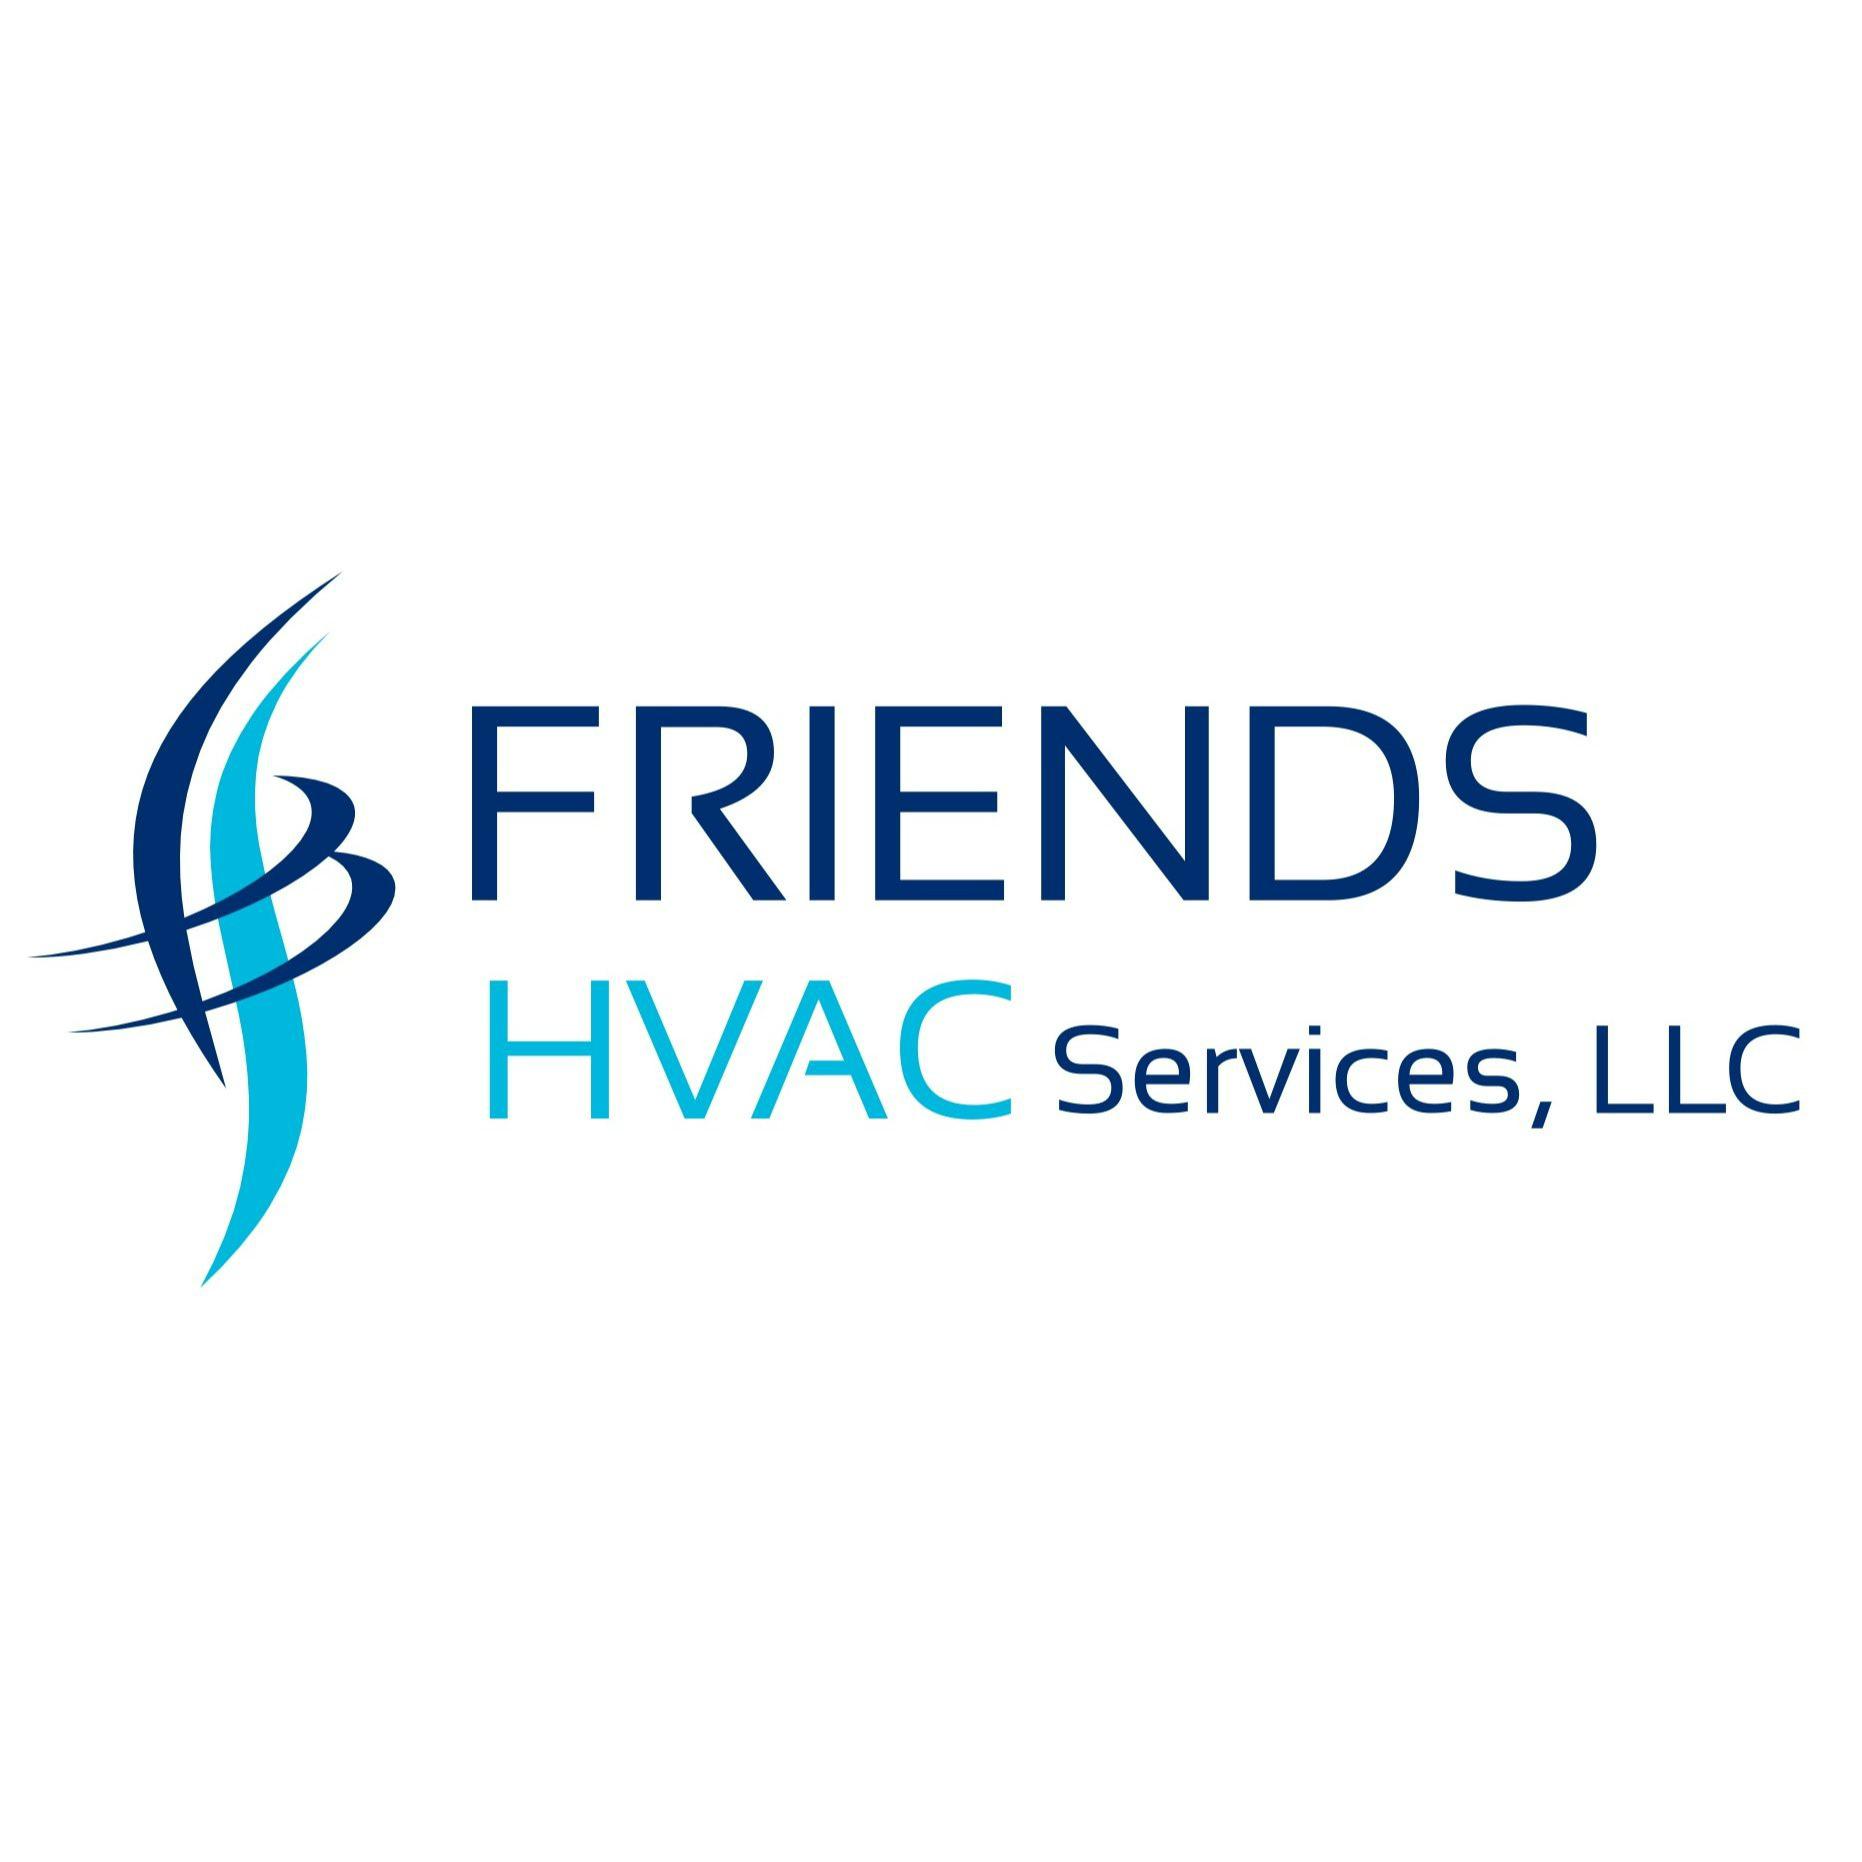 Friends HVAC Services, LLC - Pflugerville, TX 78660 - (737)300-1777 | ShowMeLocal.com